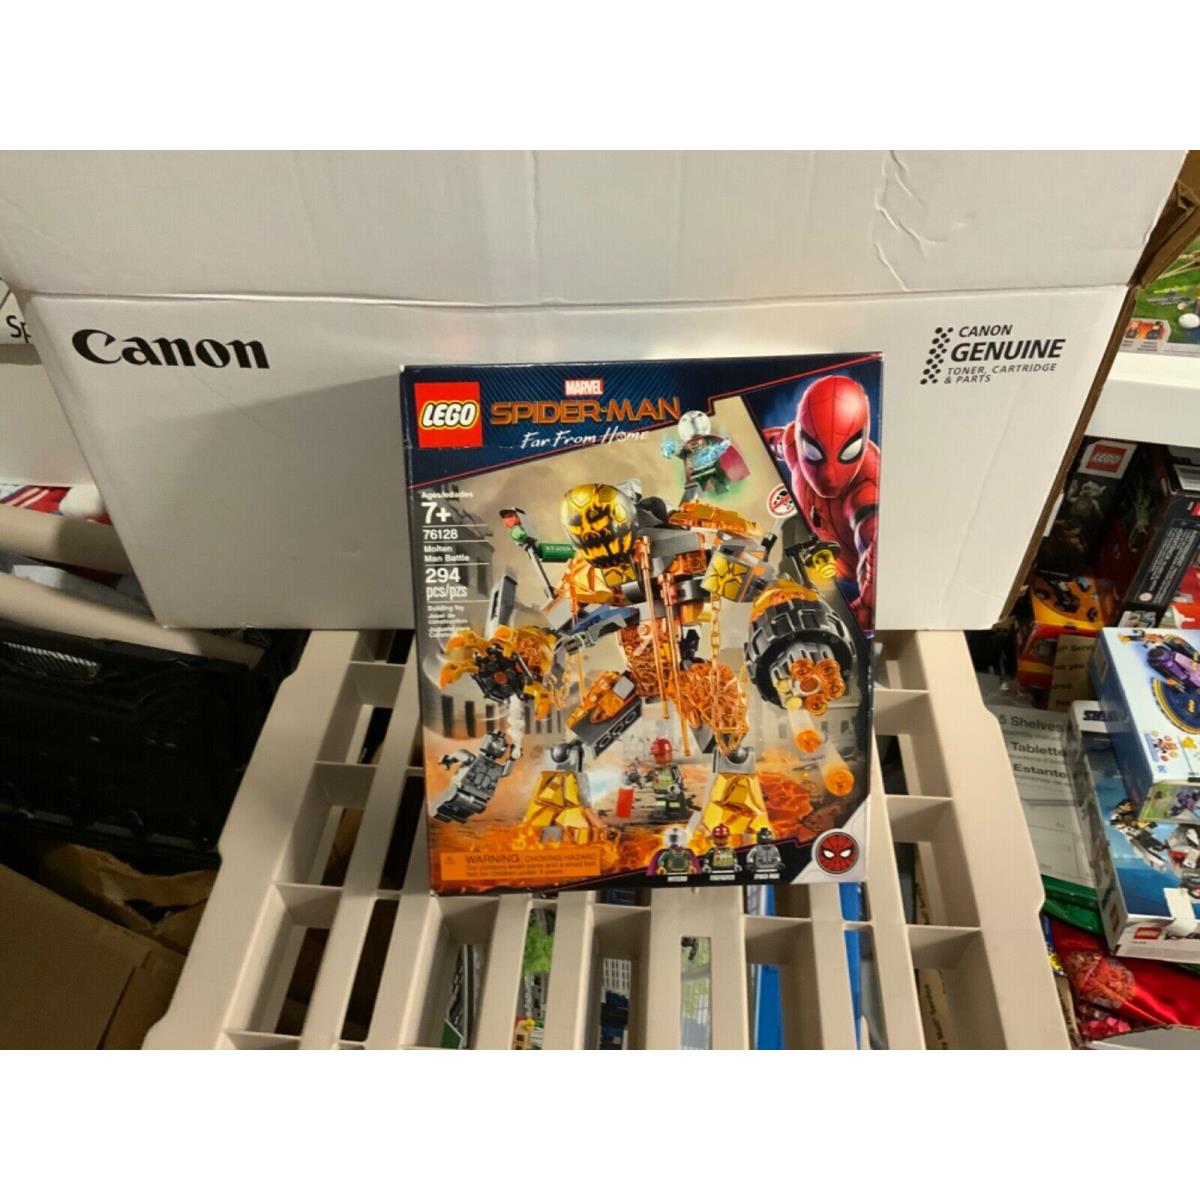 76128 Molten Man Battle Spider-man Far From Home Mysterio Lego Legos Set